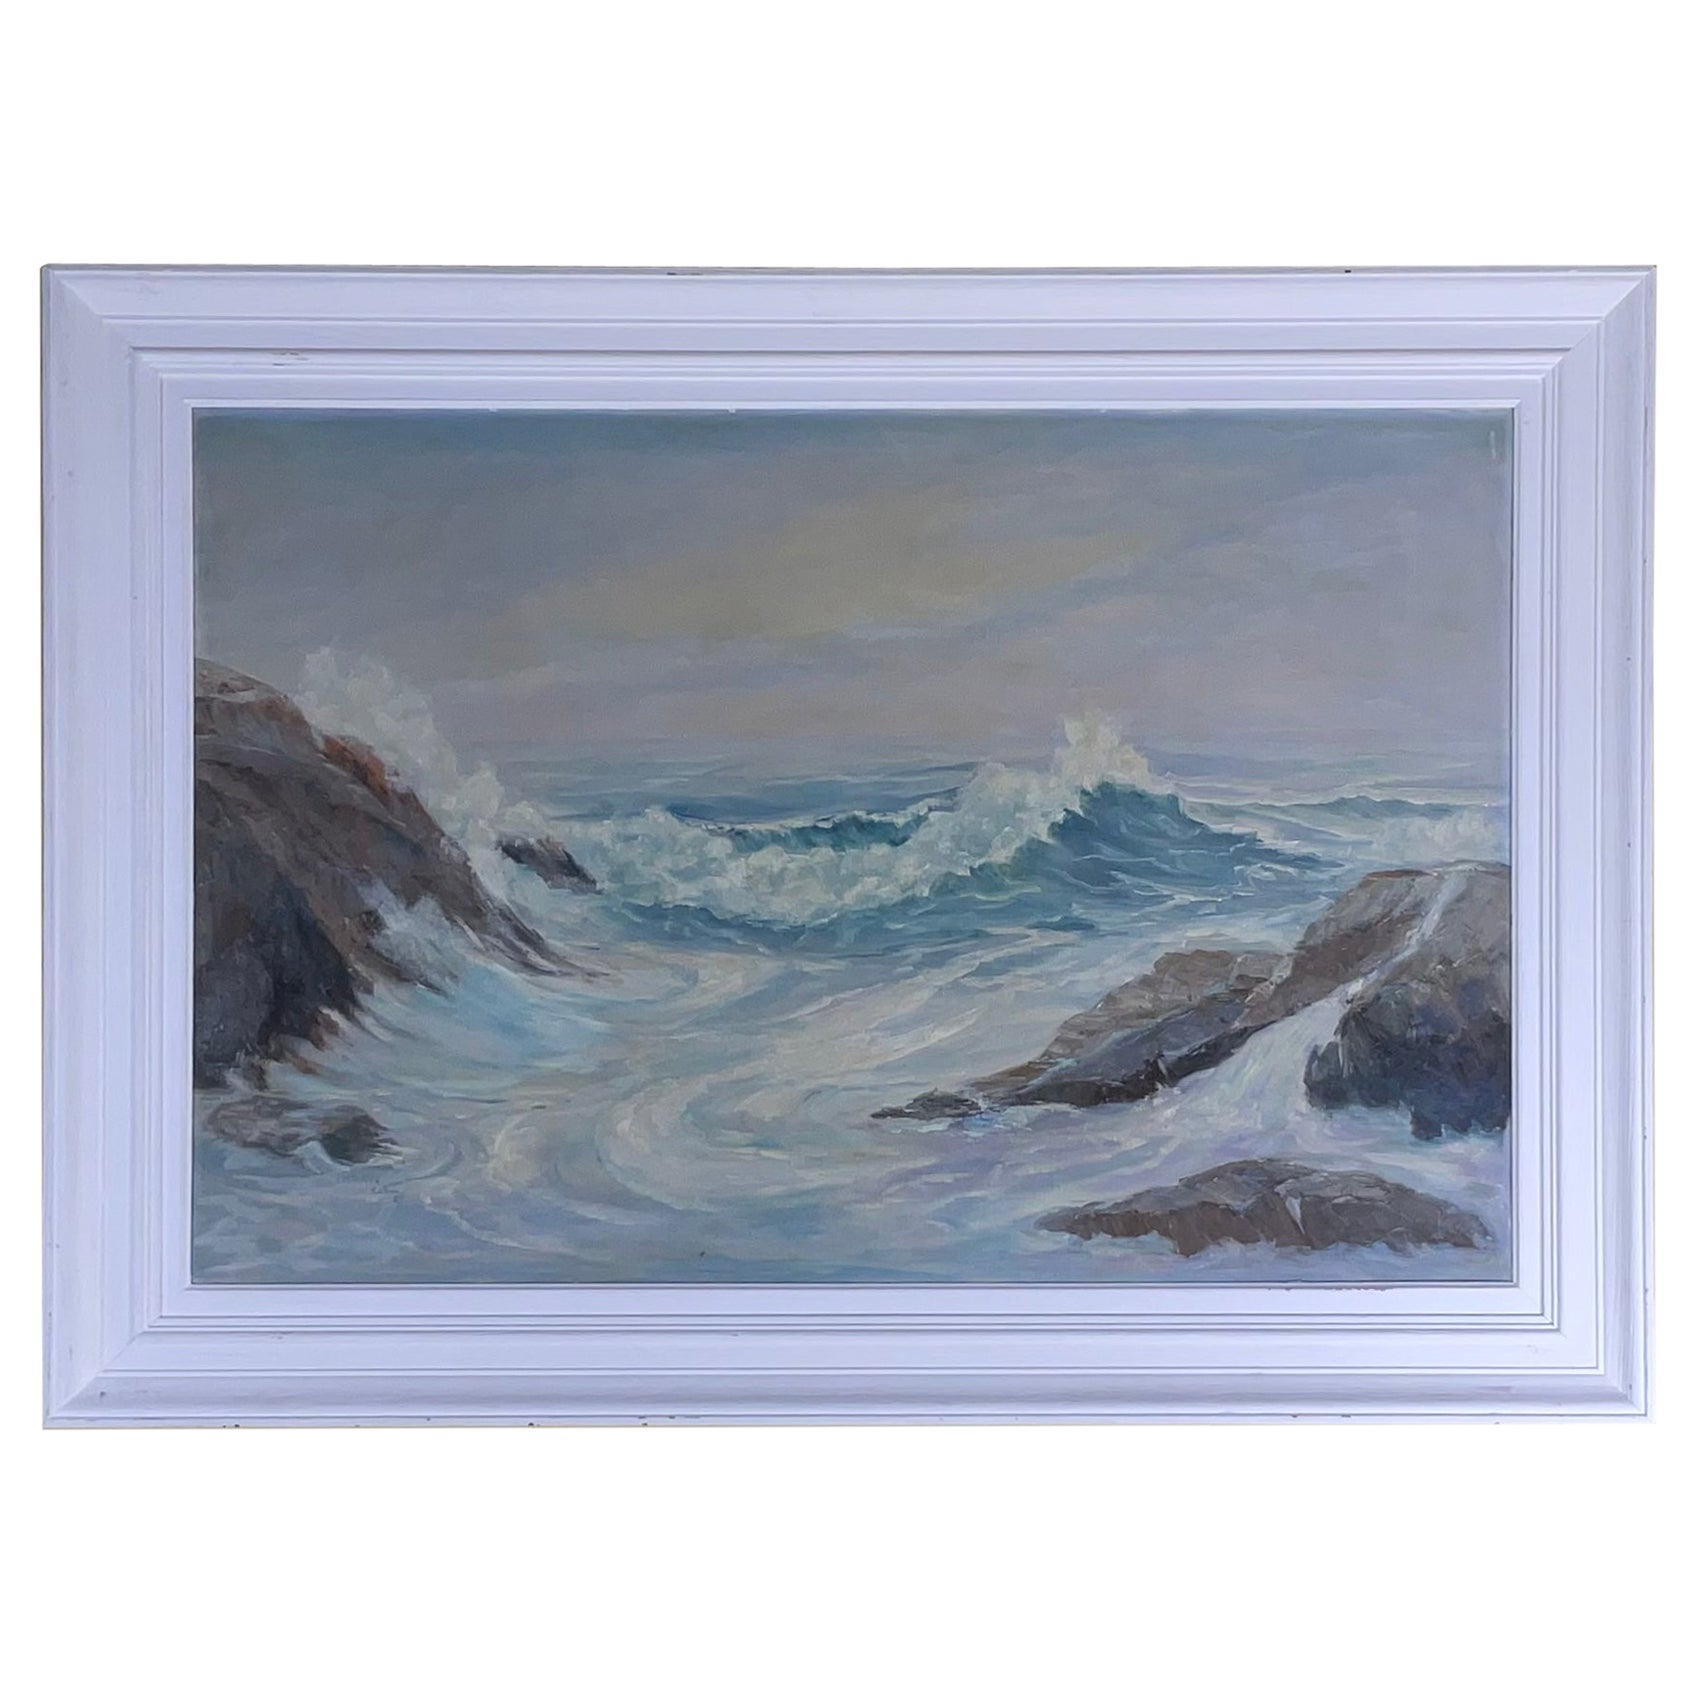 Vintage, paisaje marino tormentoso Pintura al óleo sobre lienzo